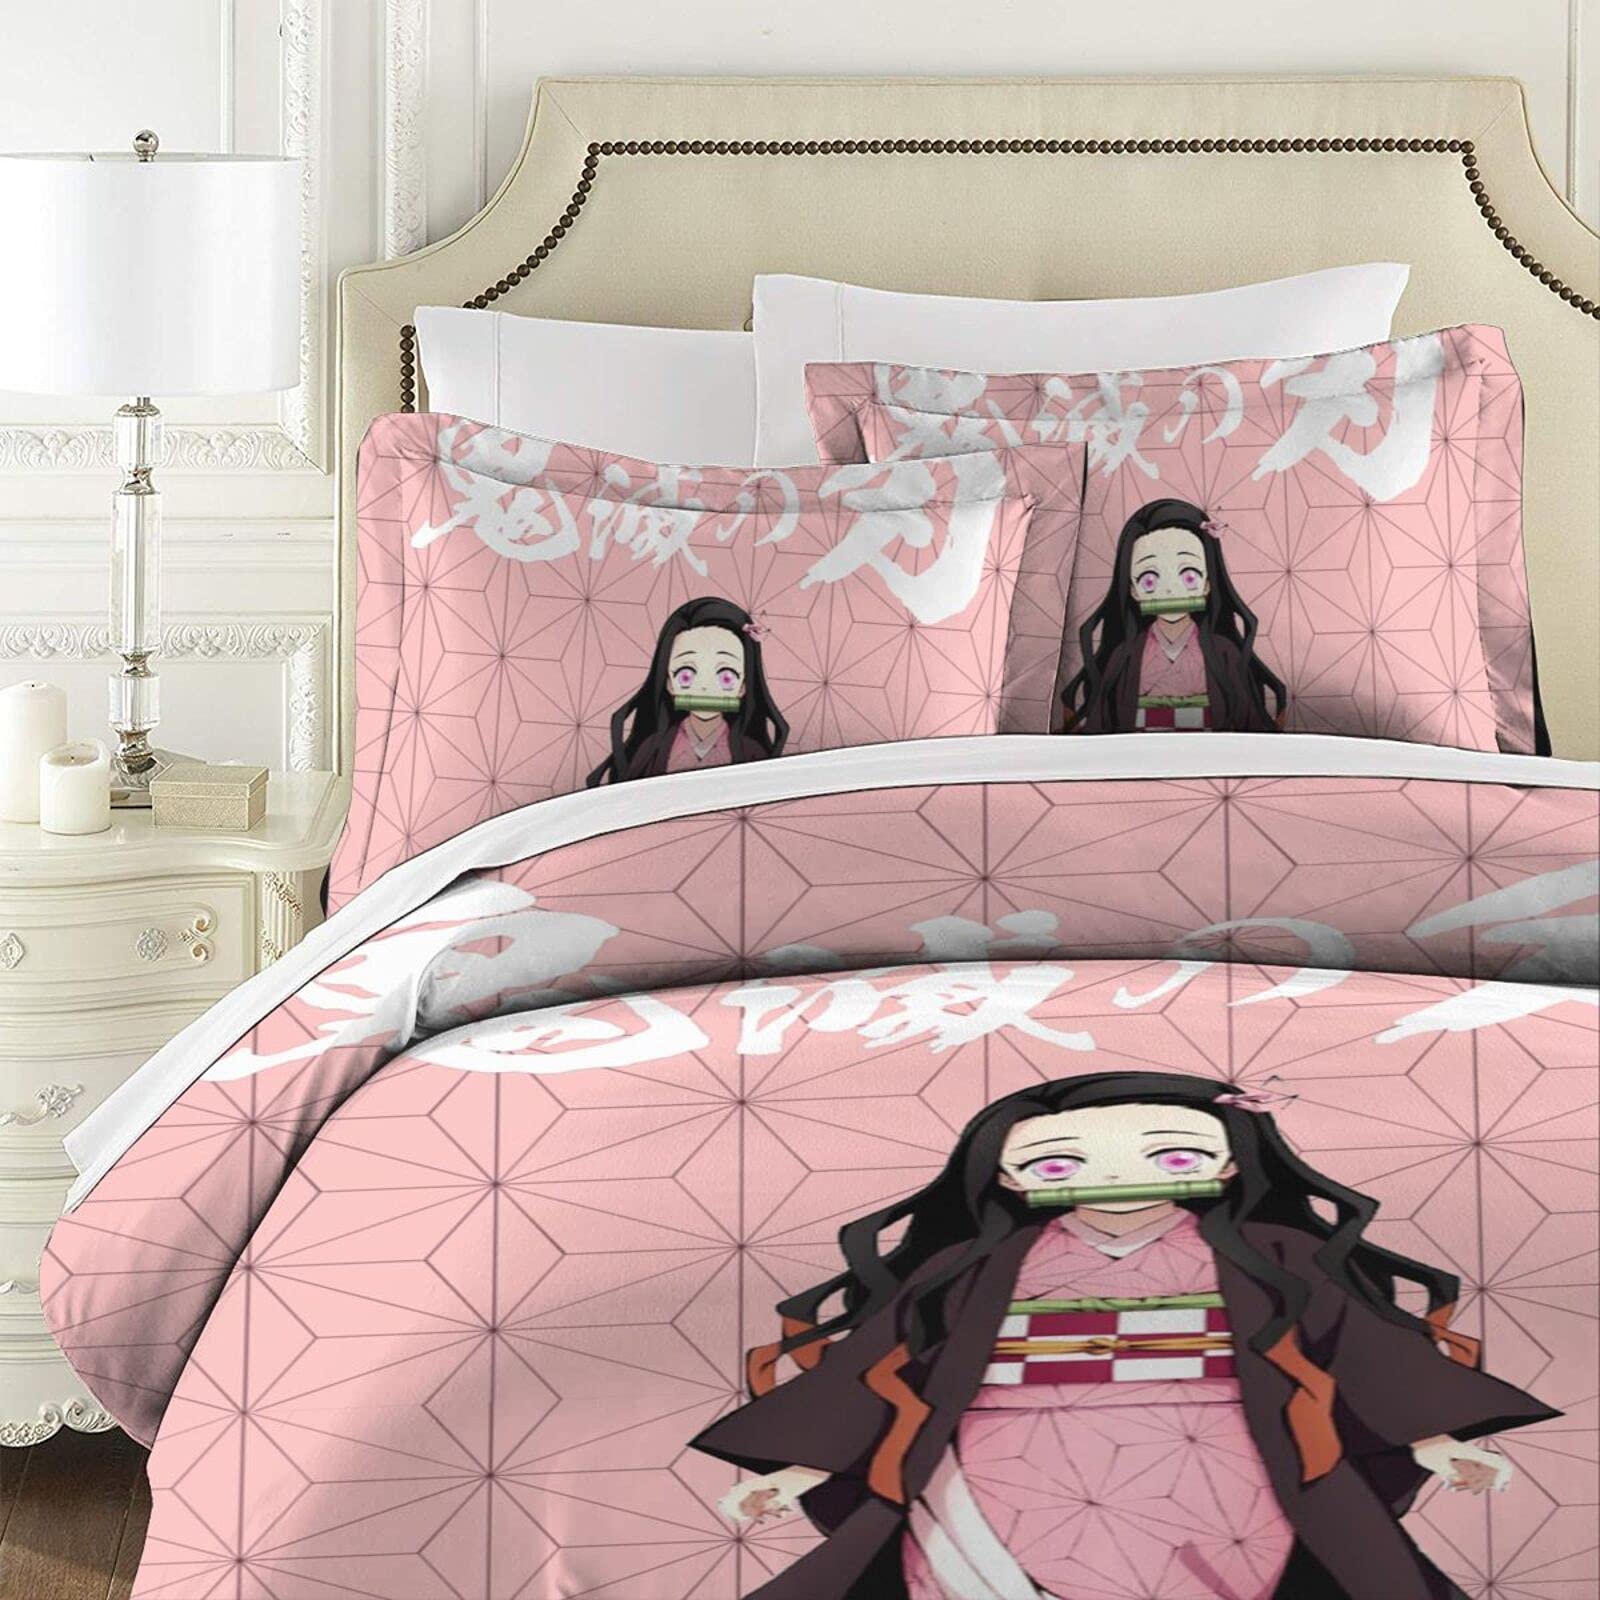 Uzumaki Naruto Bedding Set Quilt Cover Sasuke Pillowcase Cartoon Anime Bed  Bedroom Duvet Cover Beddings Suit Kids Birthday Gifts - AliExpress